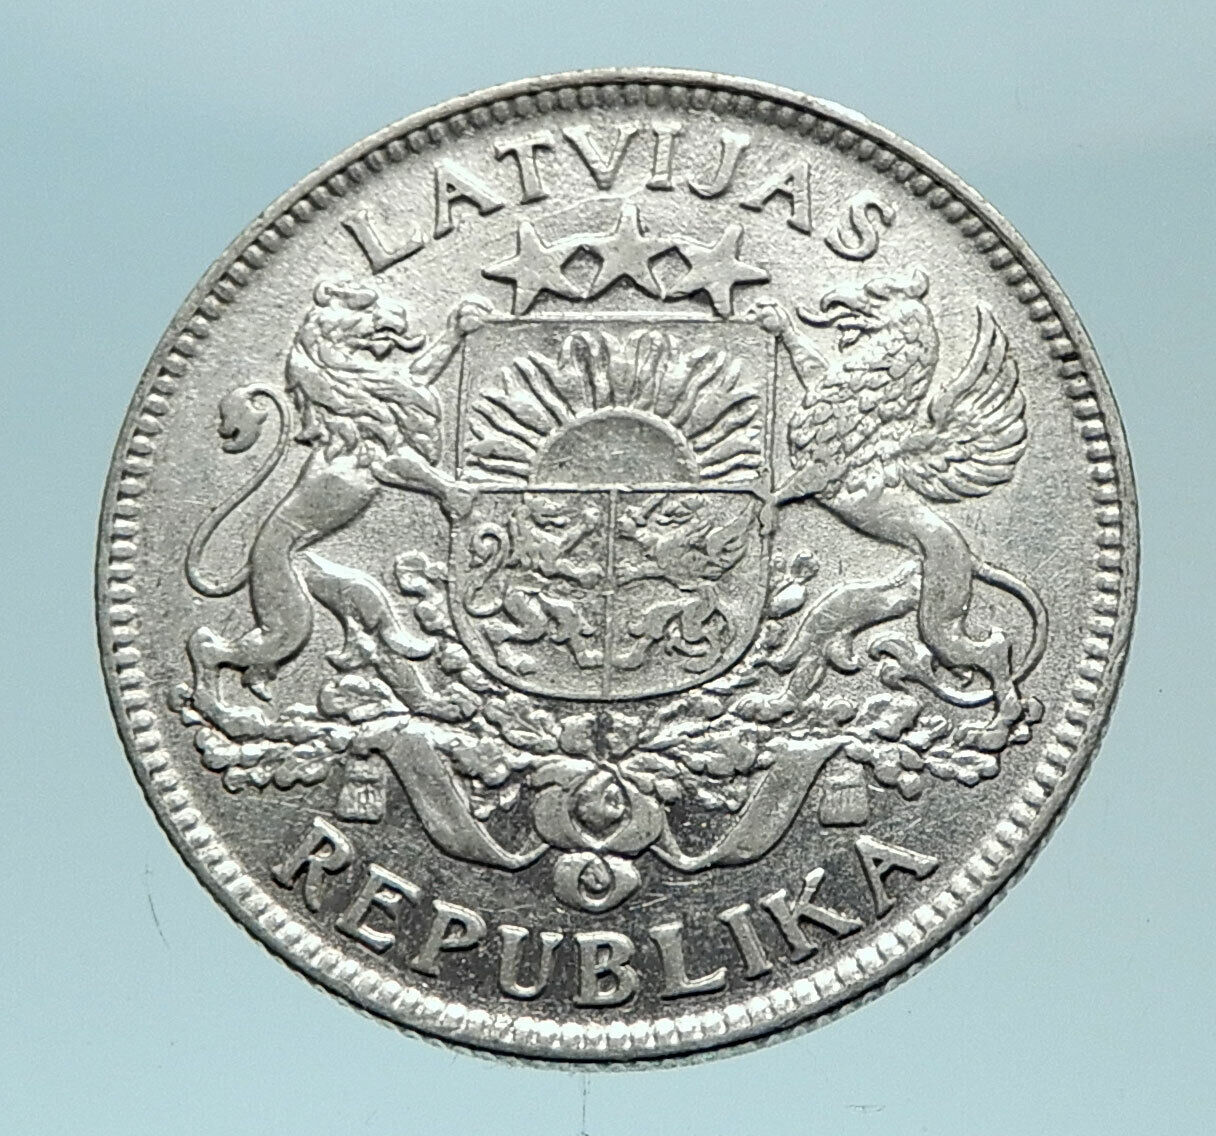 1924 LATVIA Lions & Shield Genuine Vintage Silver European Lats Coin i78774